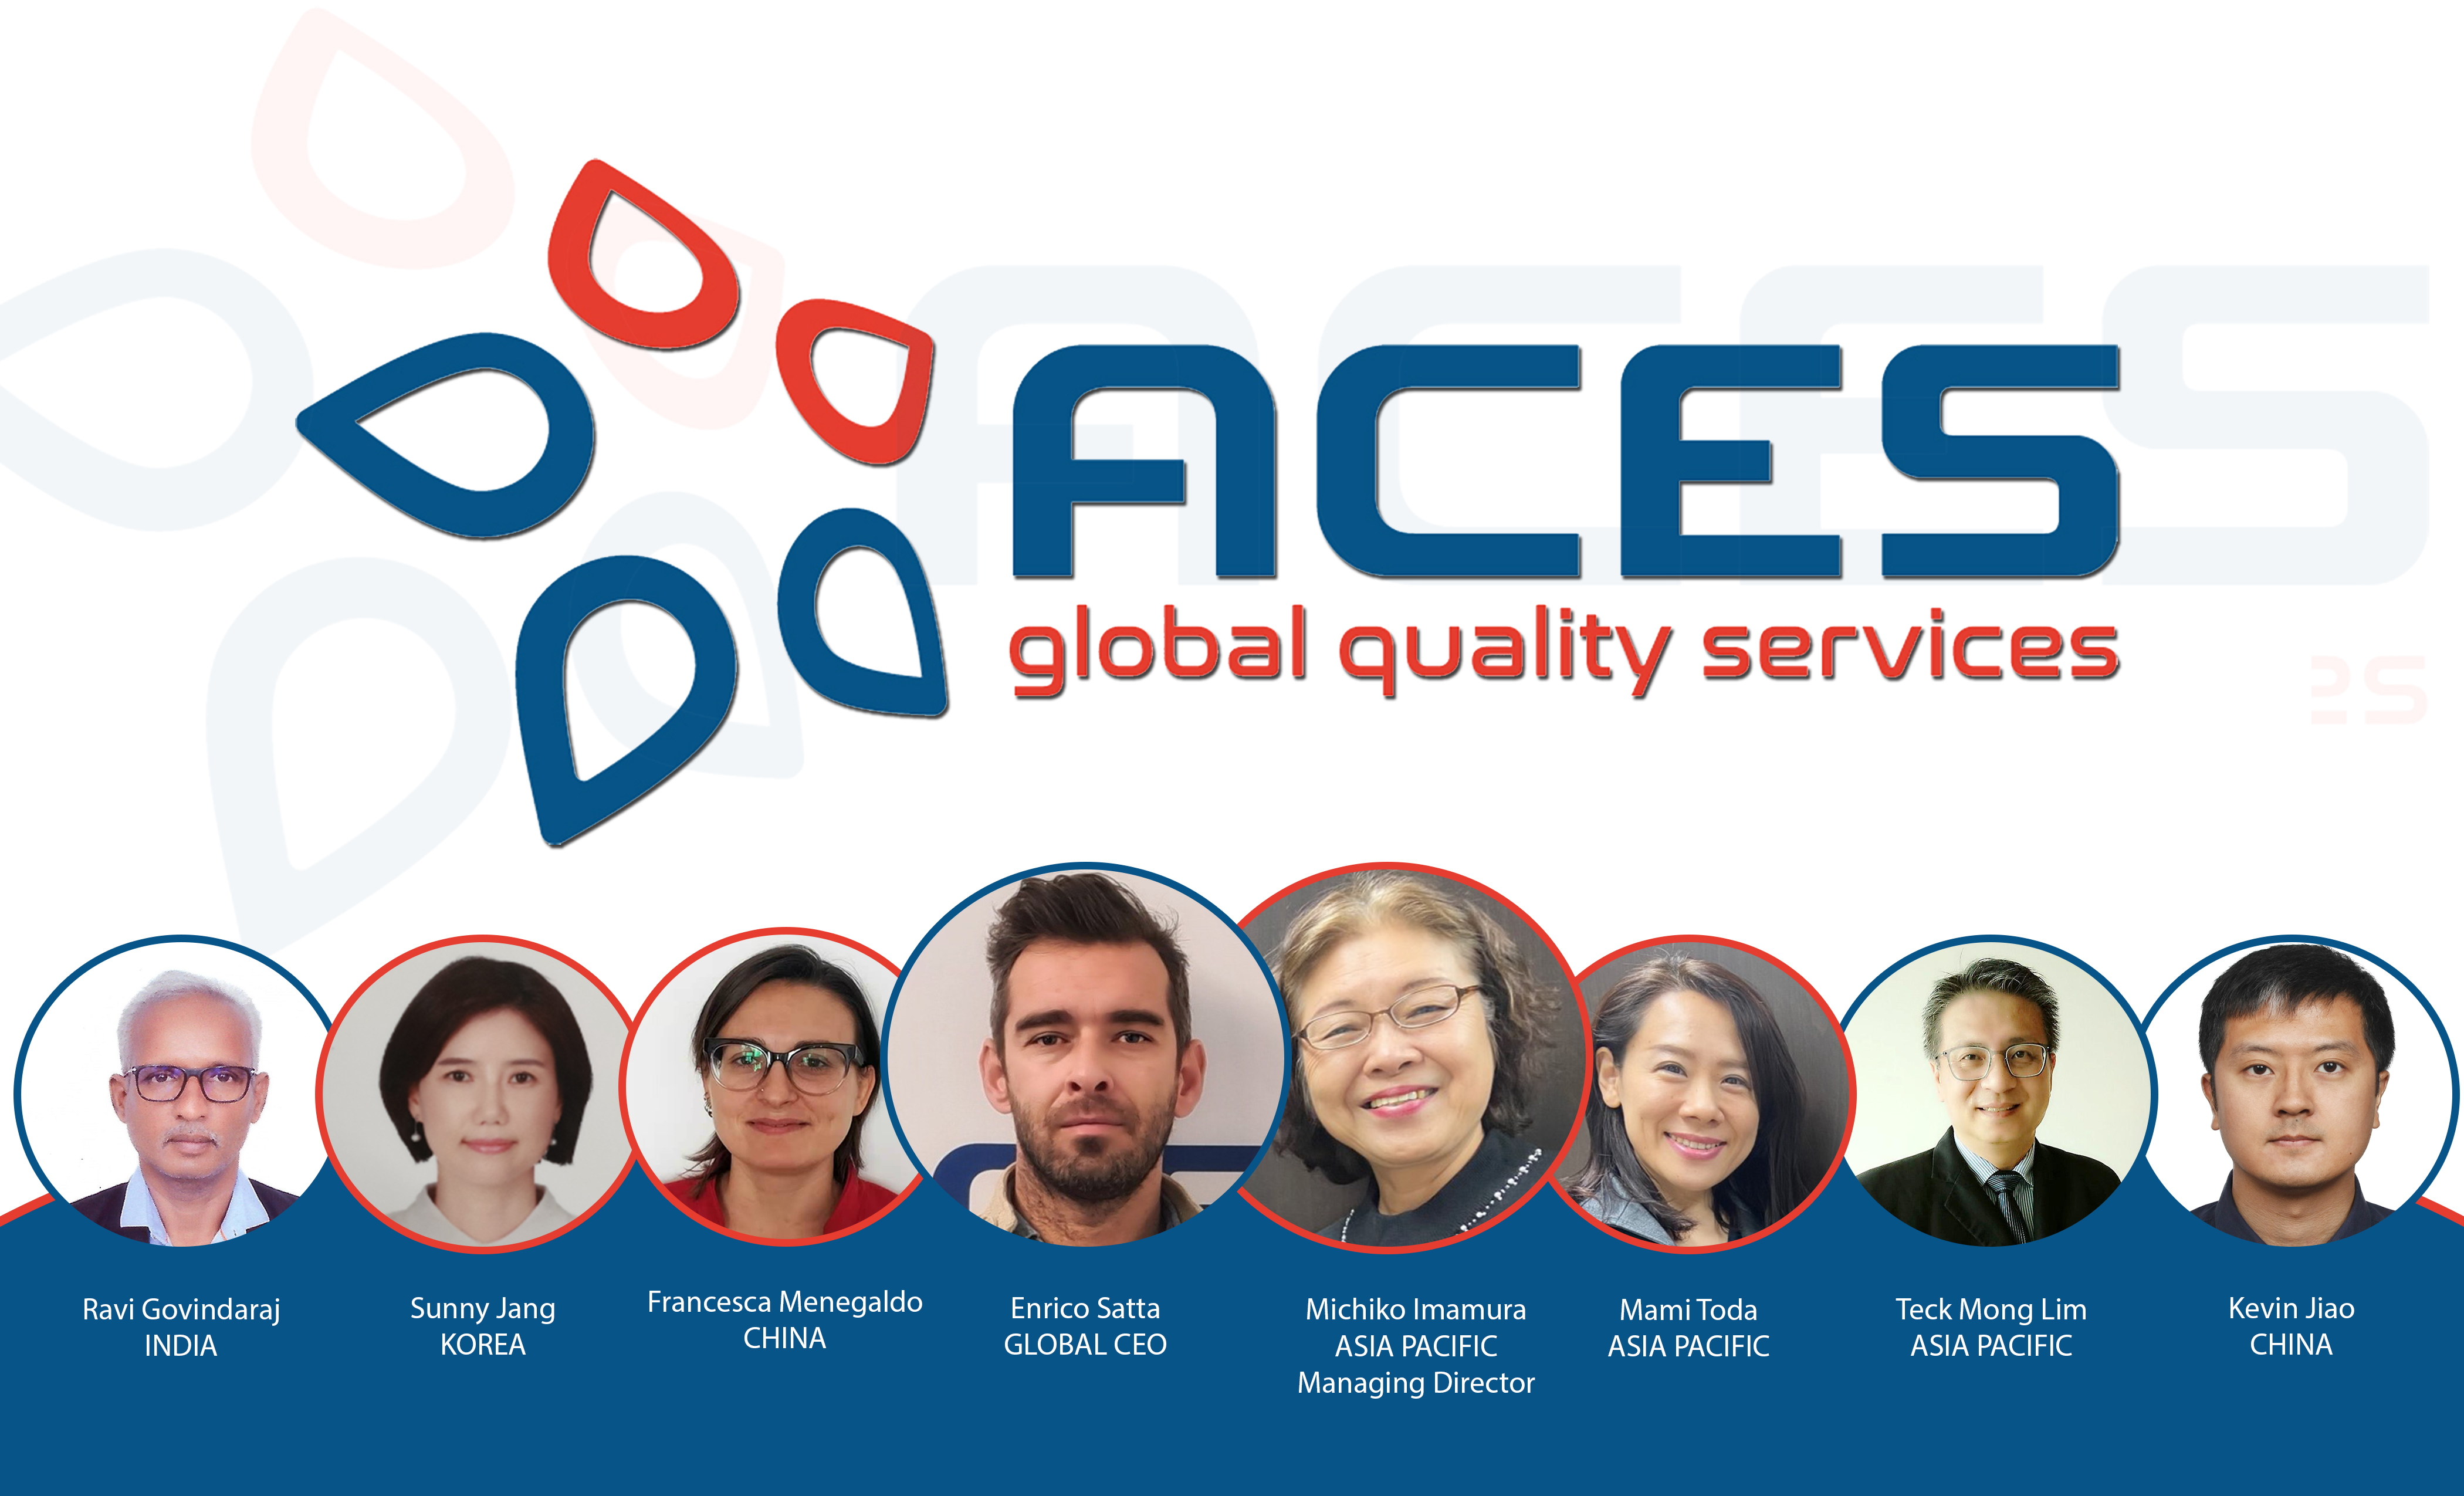 Aces Global Quality Services非常荣幸地宣布与阿美亚太公司签订了为期6年的检验服务合同